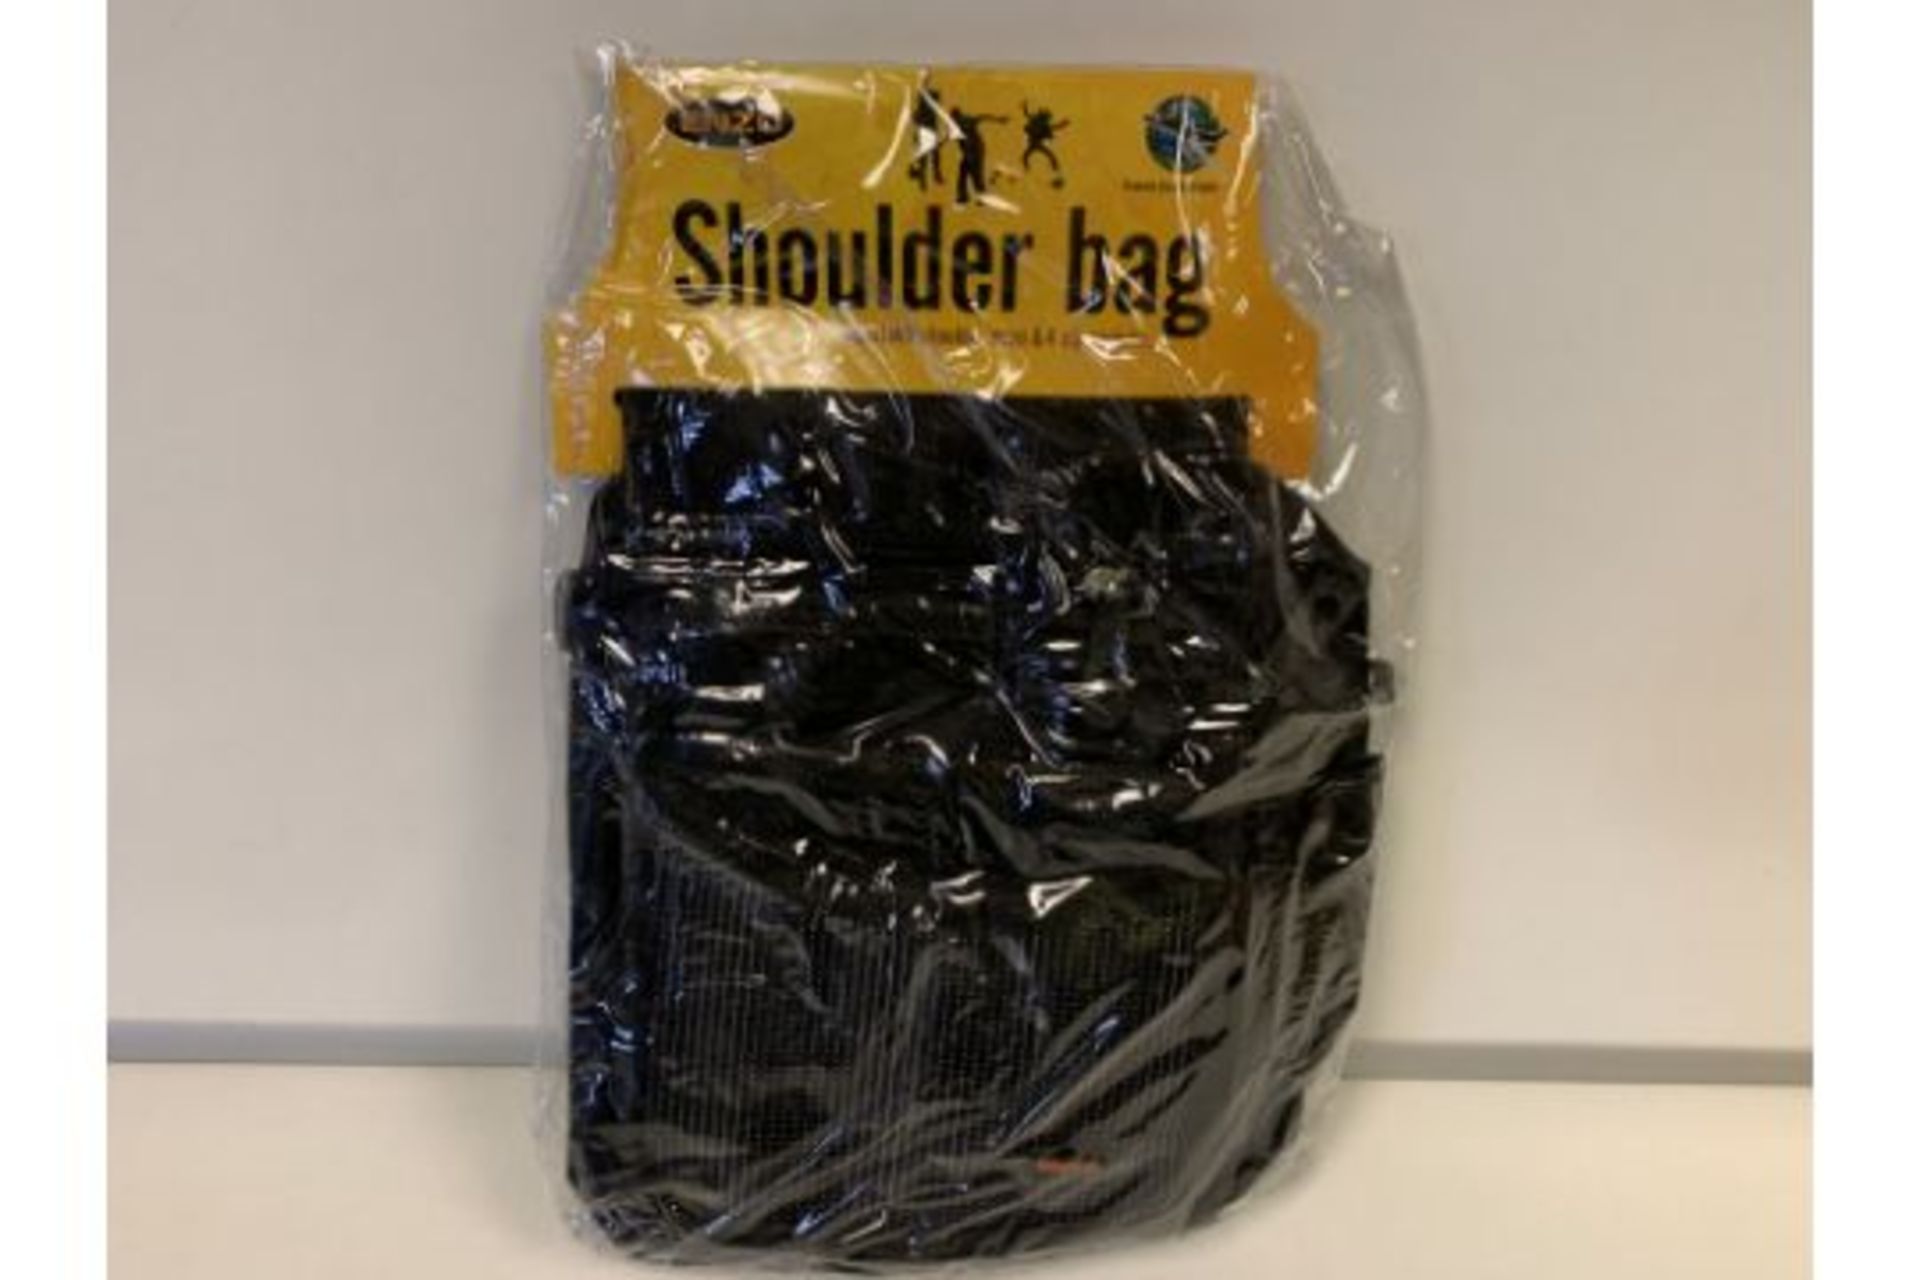 25 X ENZO SHOULDER BAGS